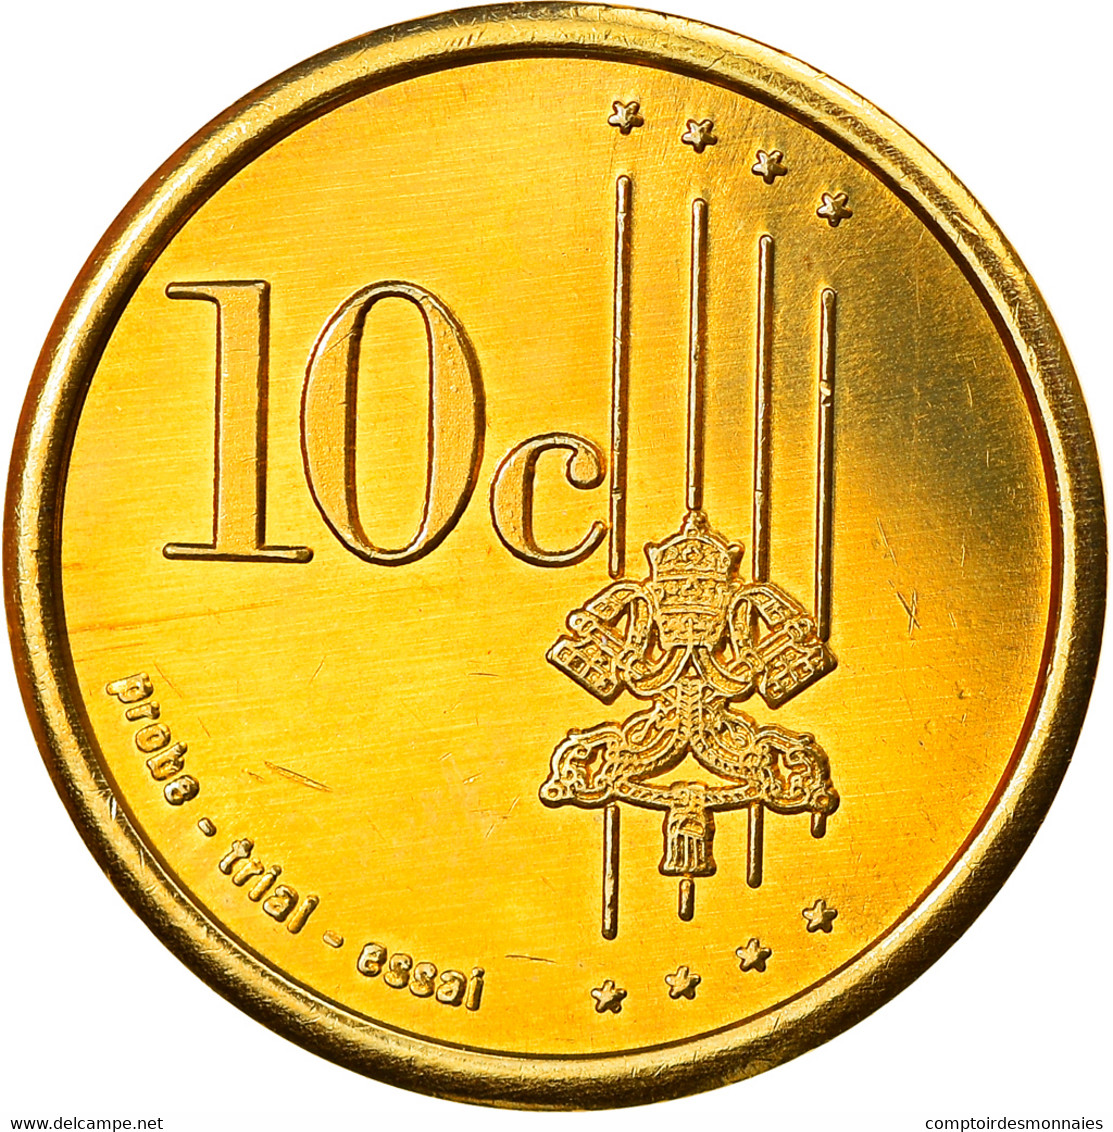 Vatican, 10 Euro Cent, 2007, Unofficial Private Coin, FDC, Laiton - Pruebas Privadas